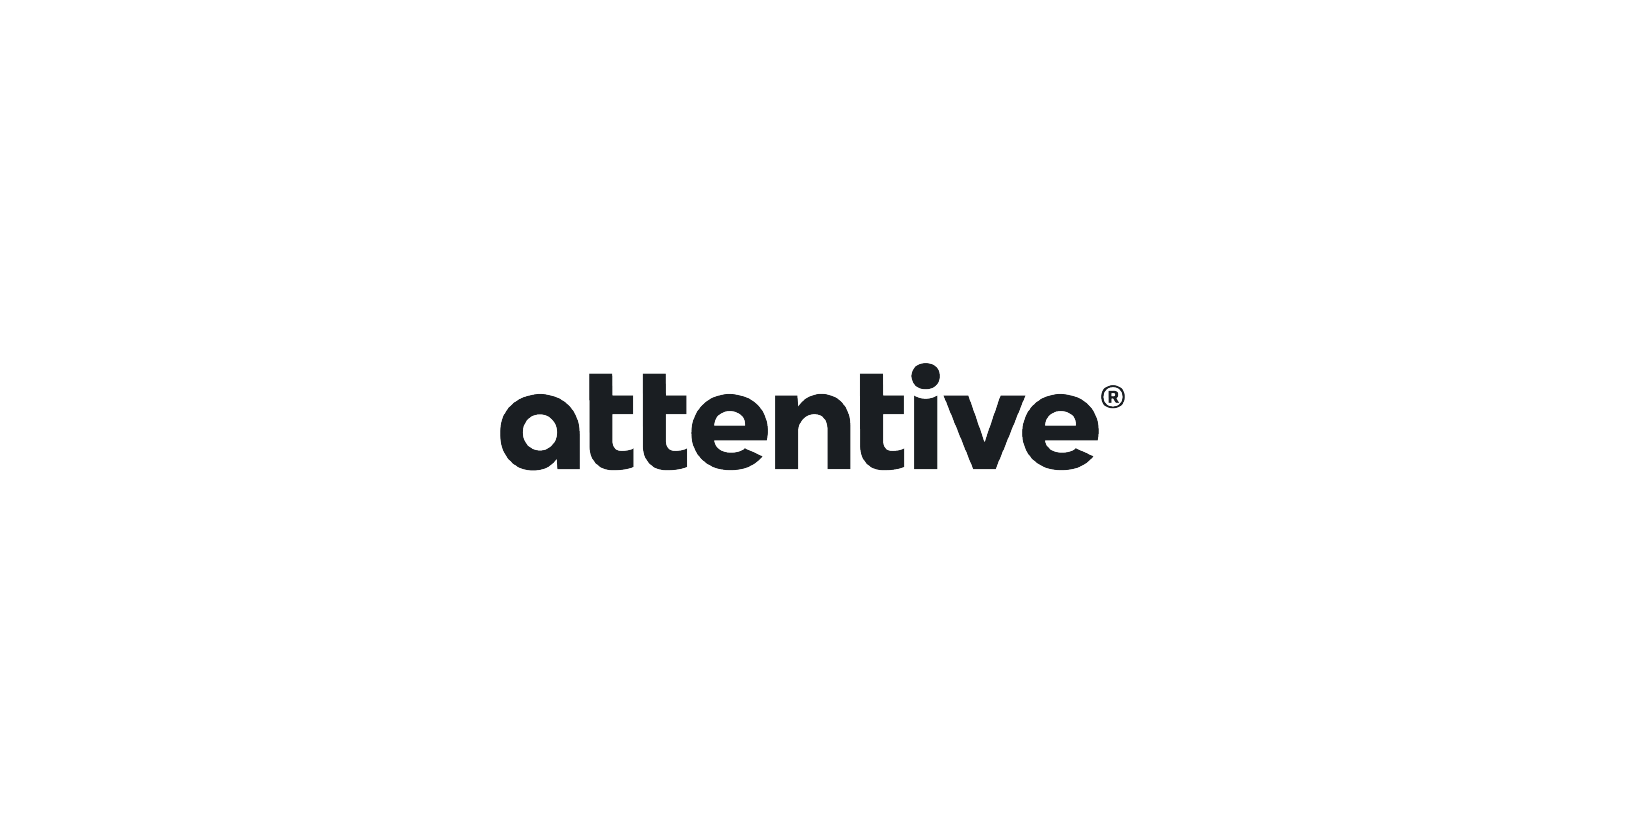 Vision Fund investment portfolio company Attentive's logo